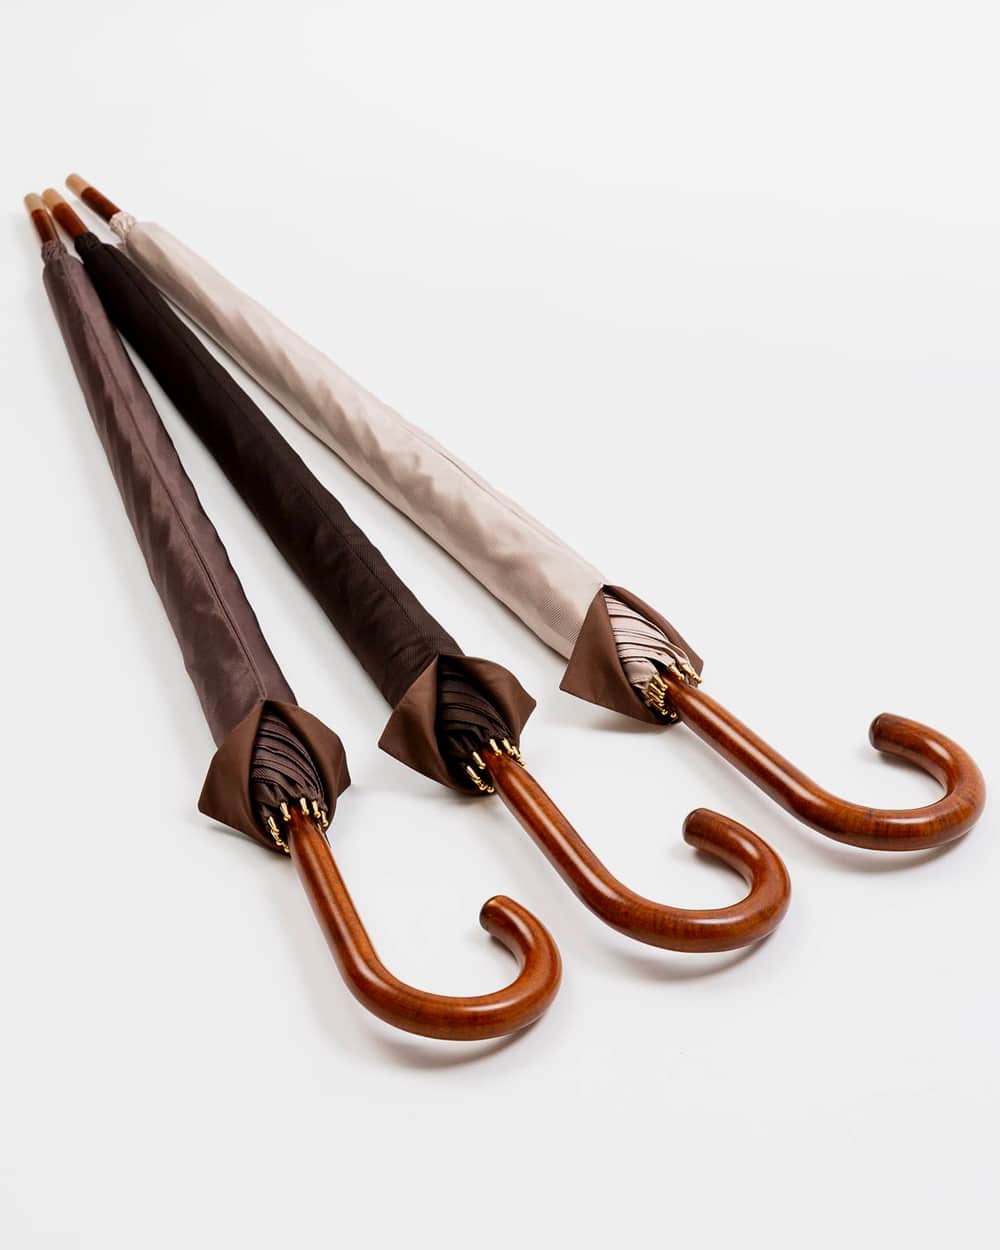 Three premium wooden handle umbrellas by Michel Heurtault with brown and beige fabric canopies